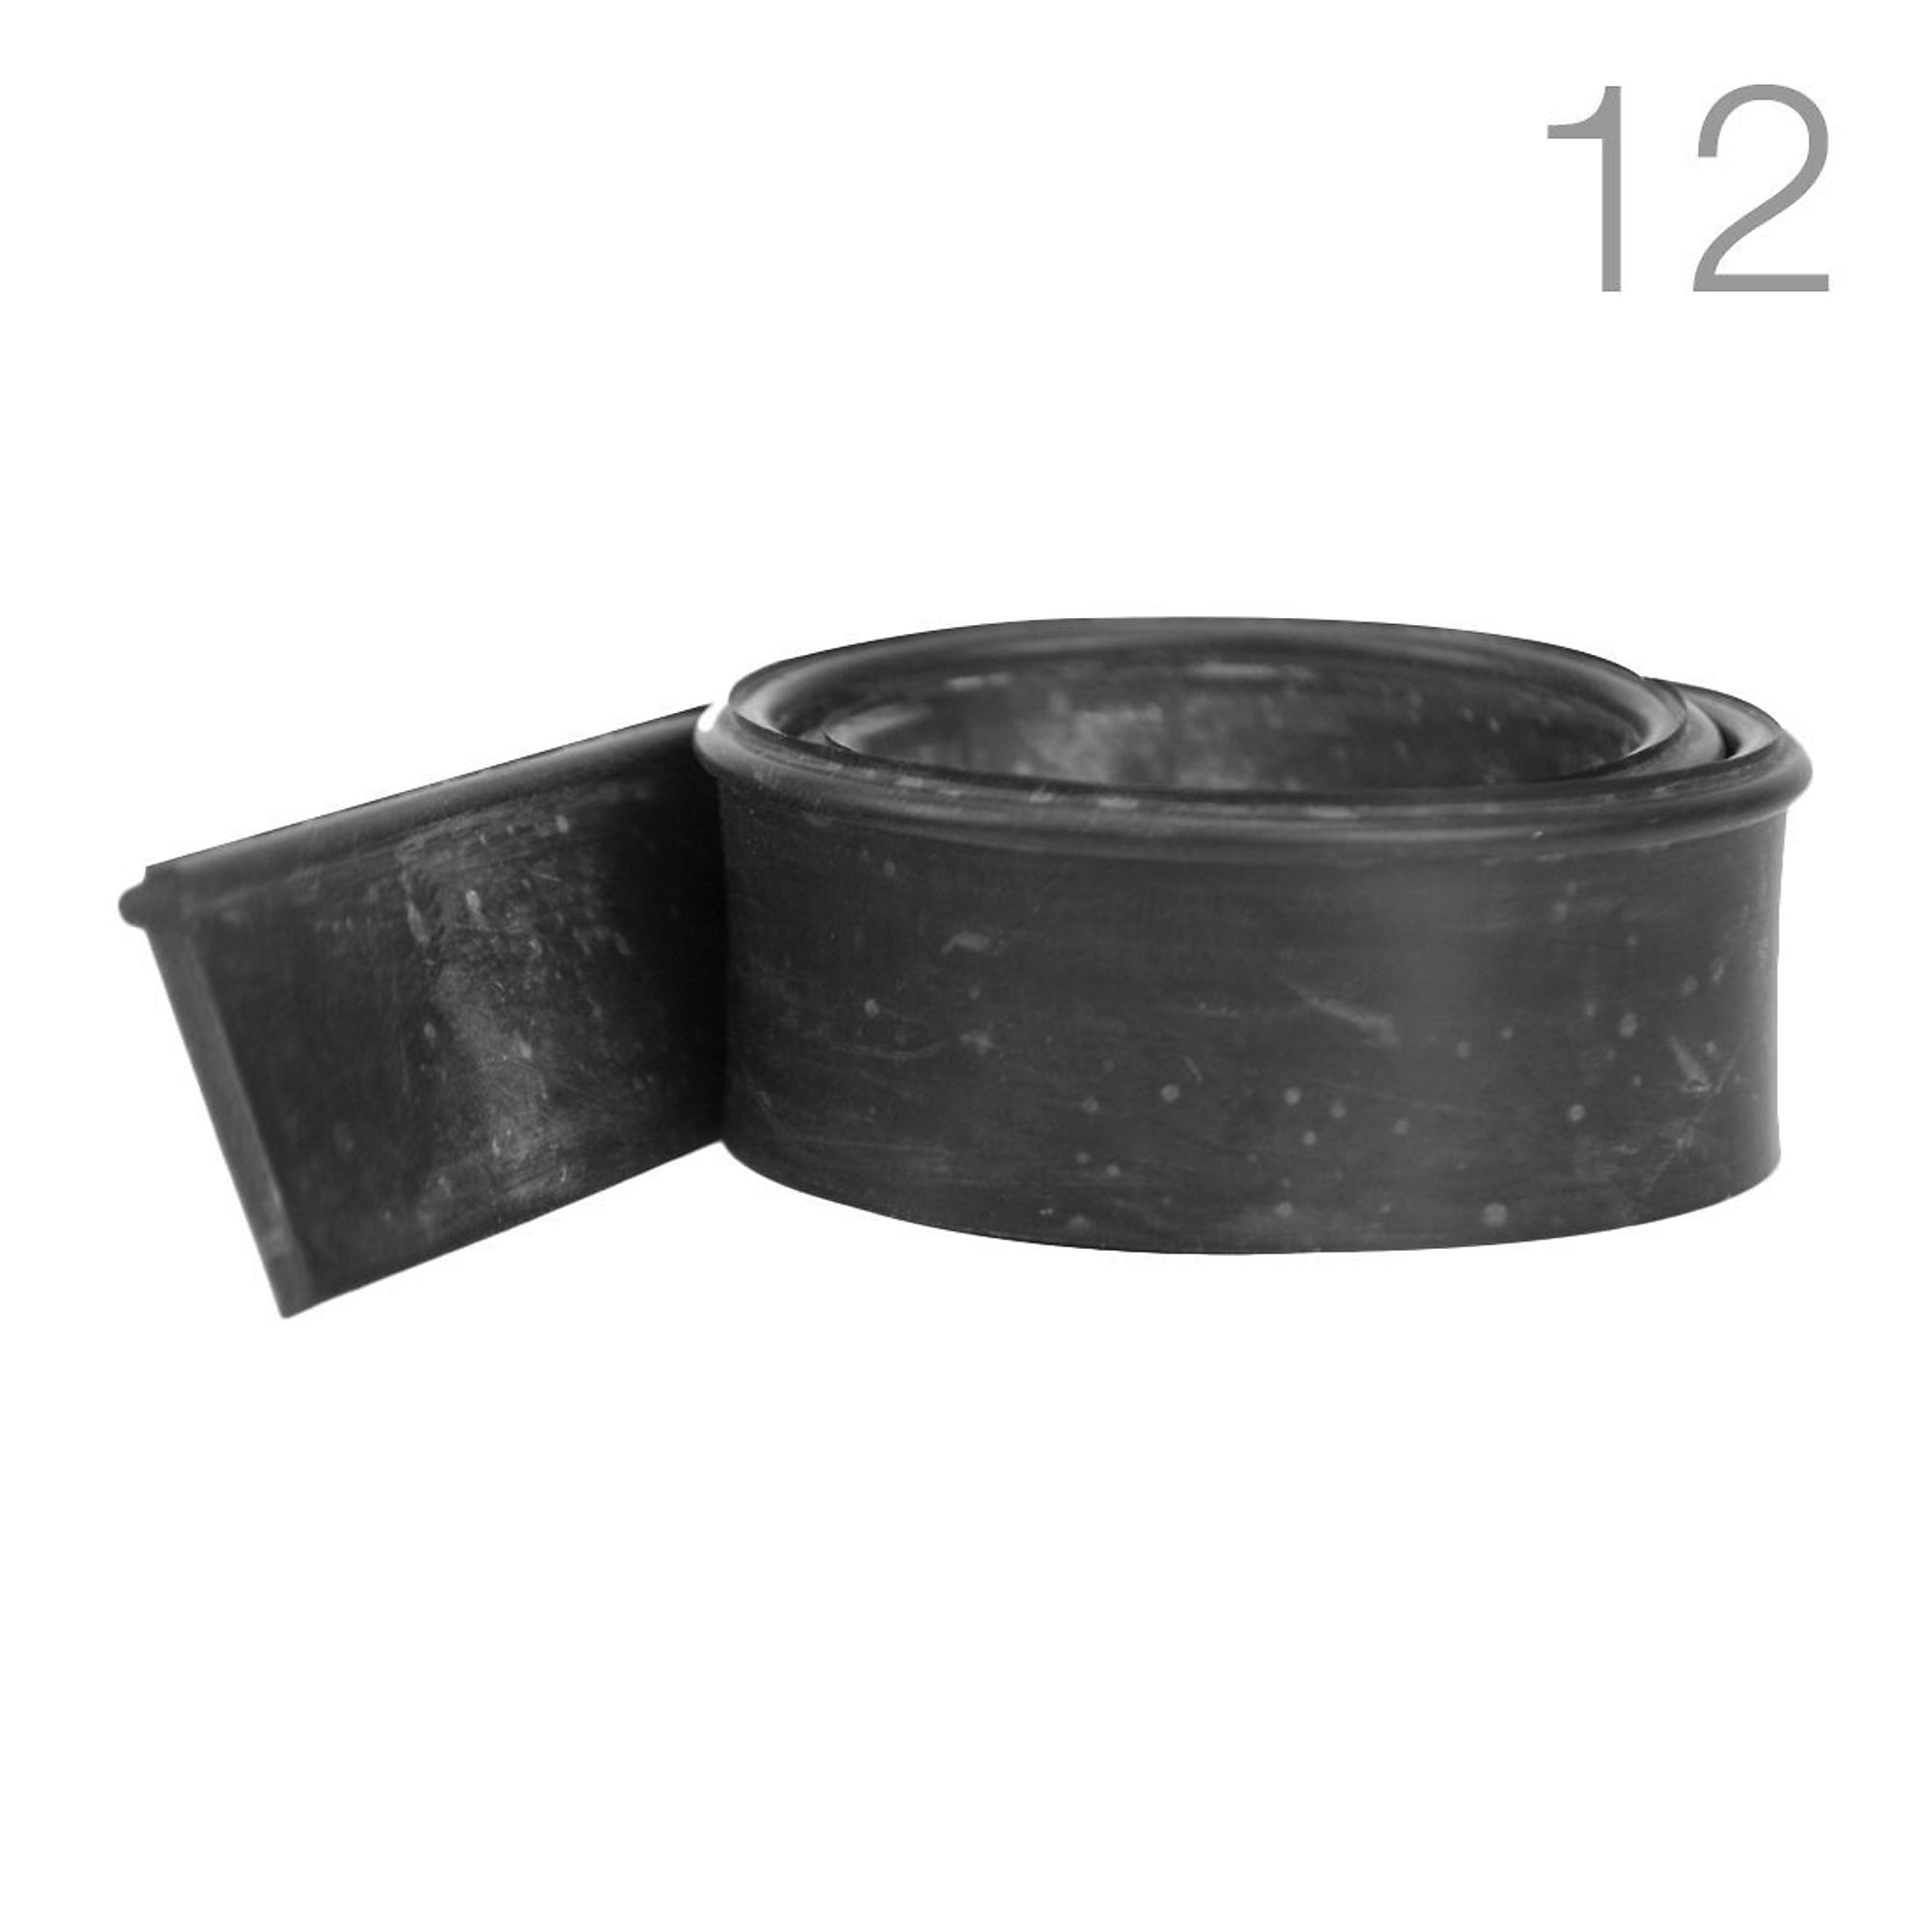 BlackDiamond, Flat Top Medium Squeegee Rubber 12 Pack - 16Inch, Model 012-05-48